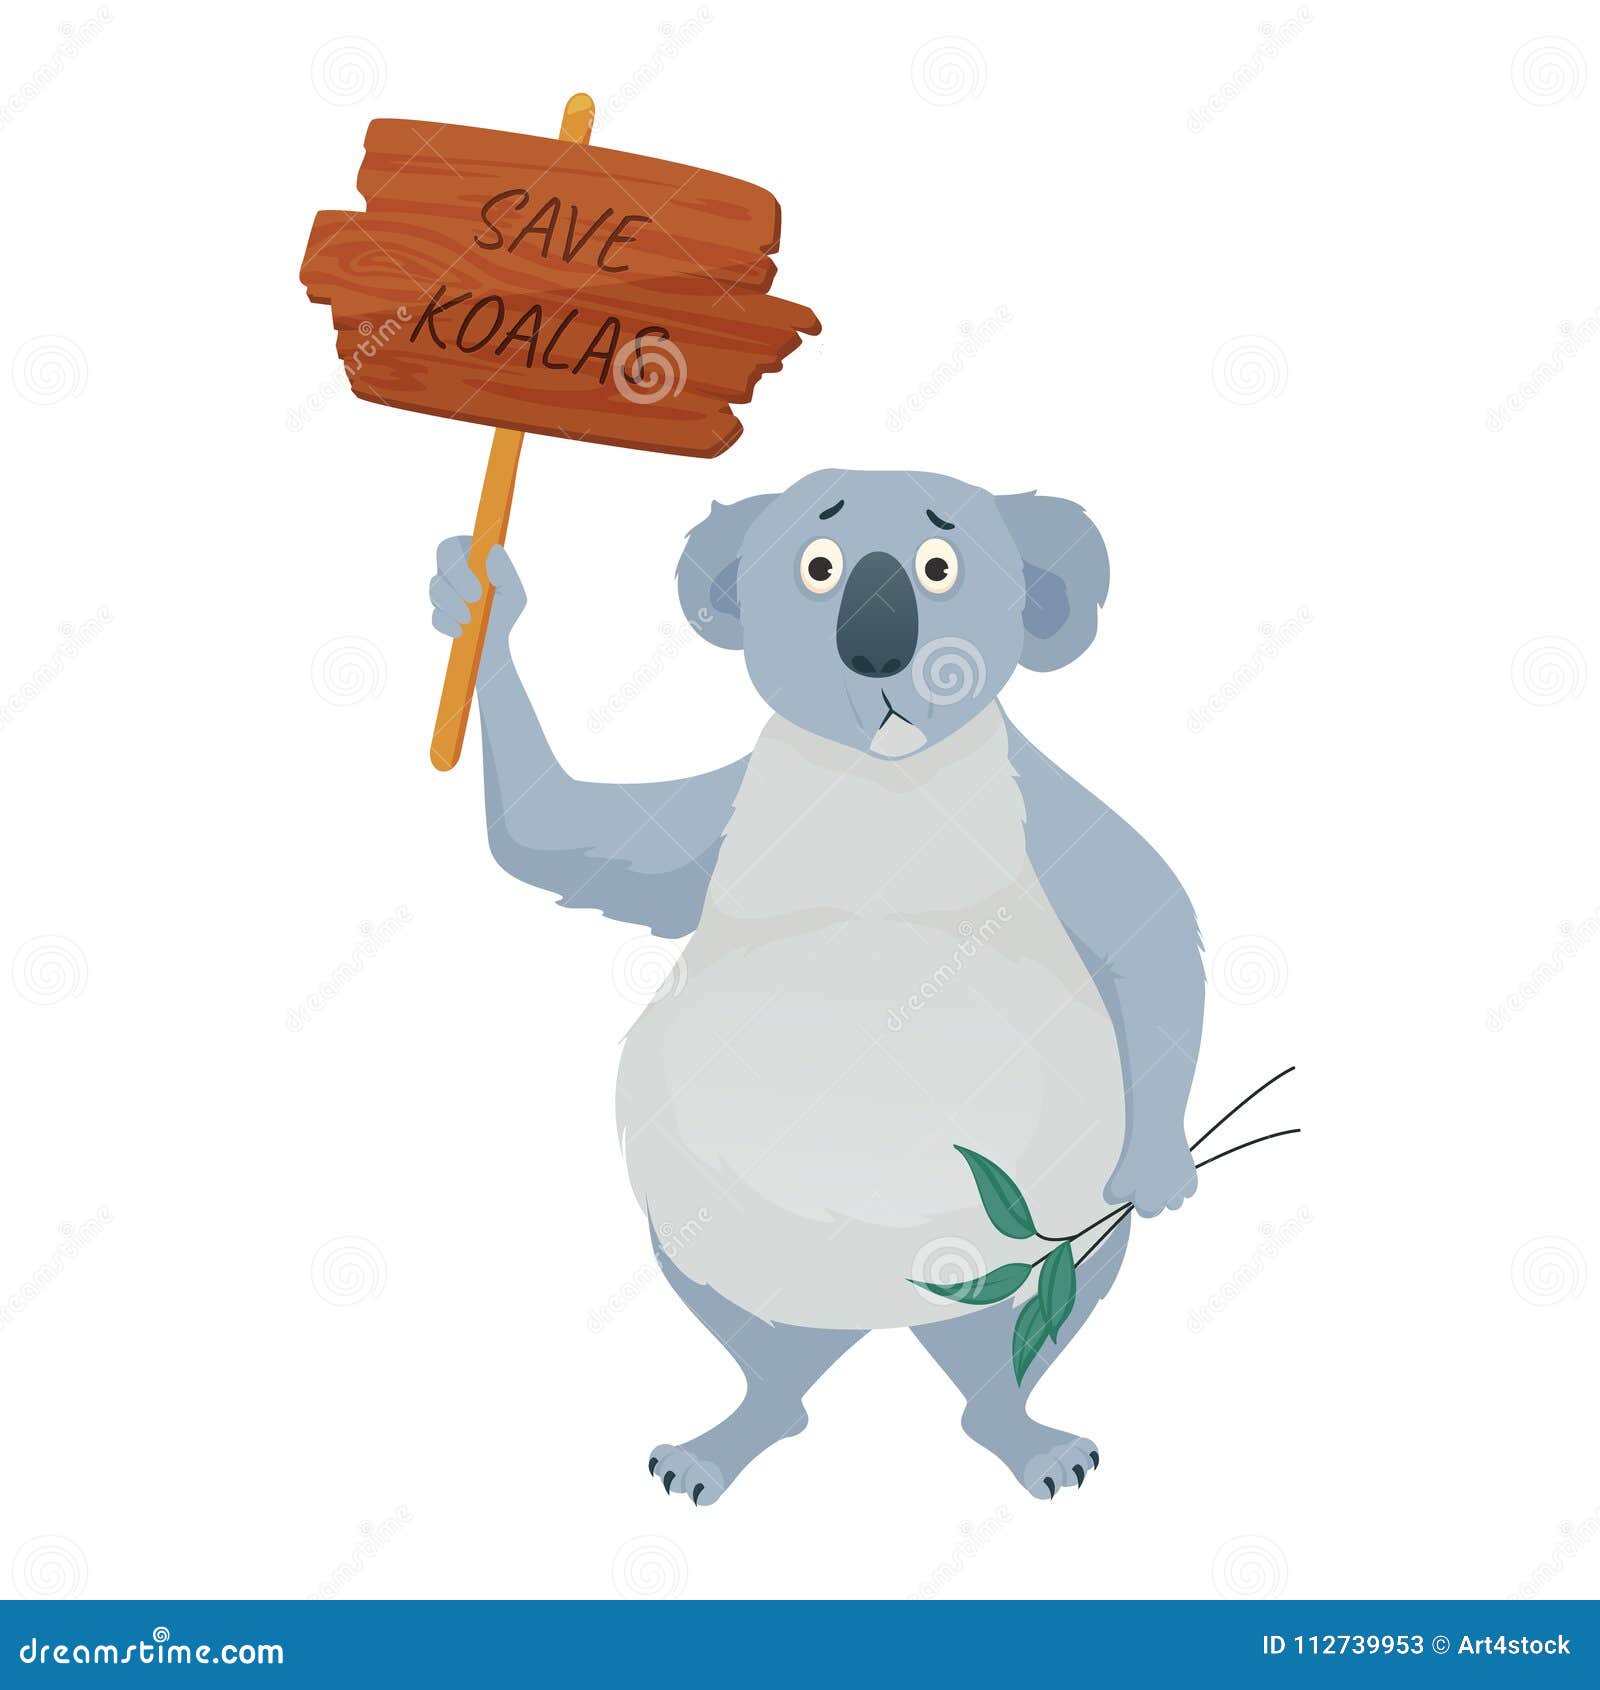 Koala protection poster stock vector. Illustration of eucalyptus - 112739953